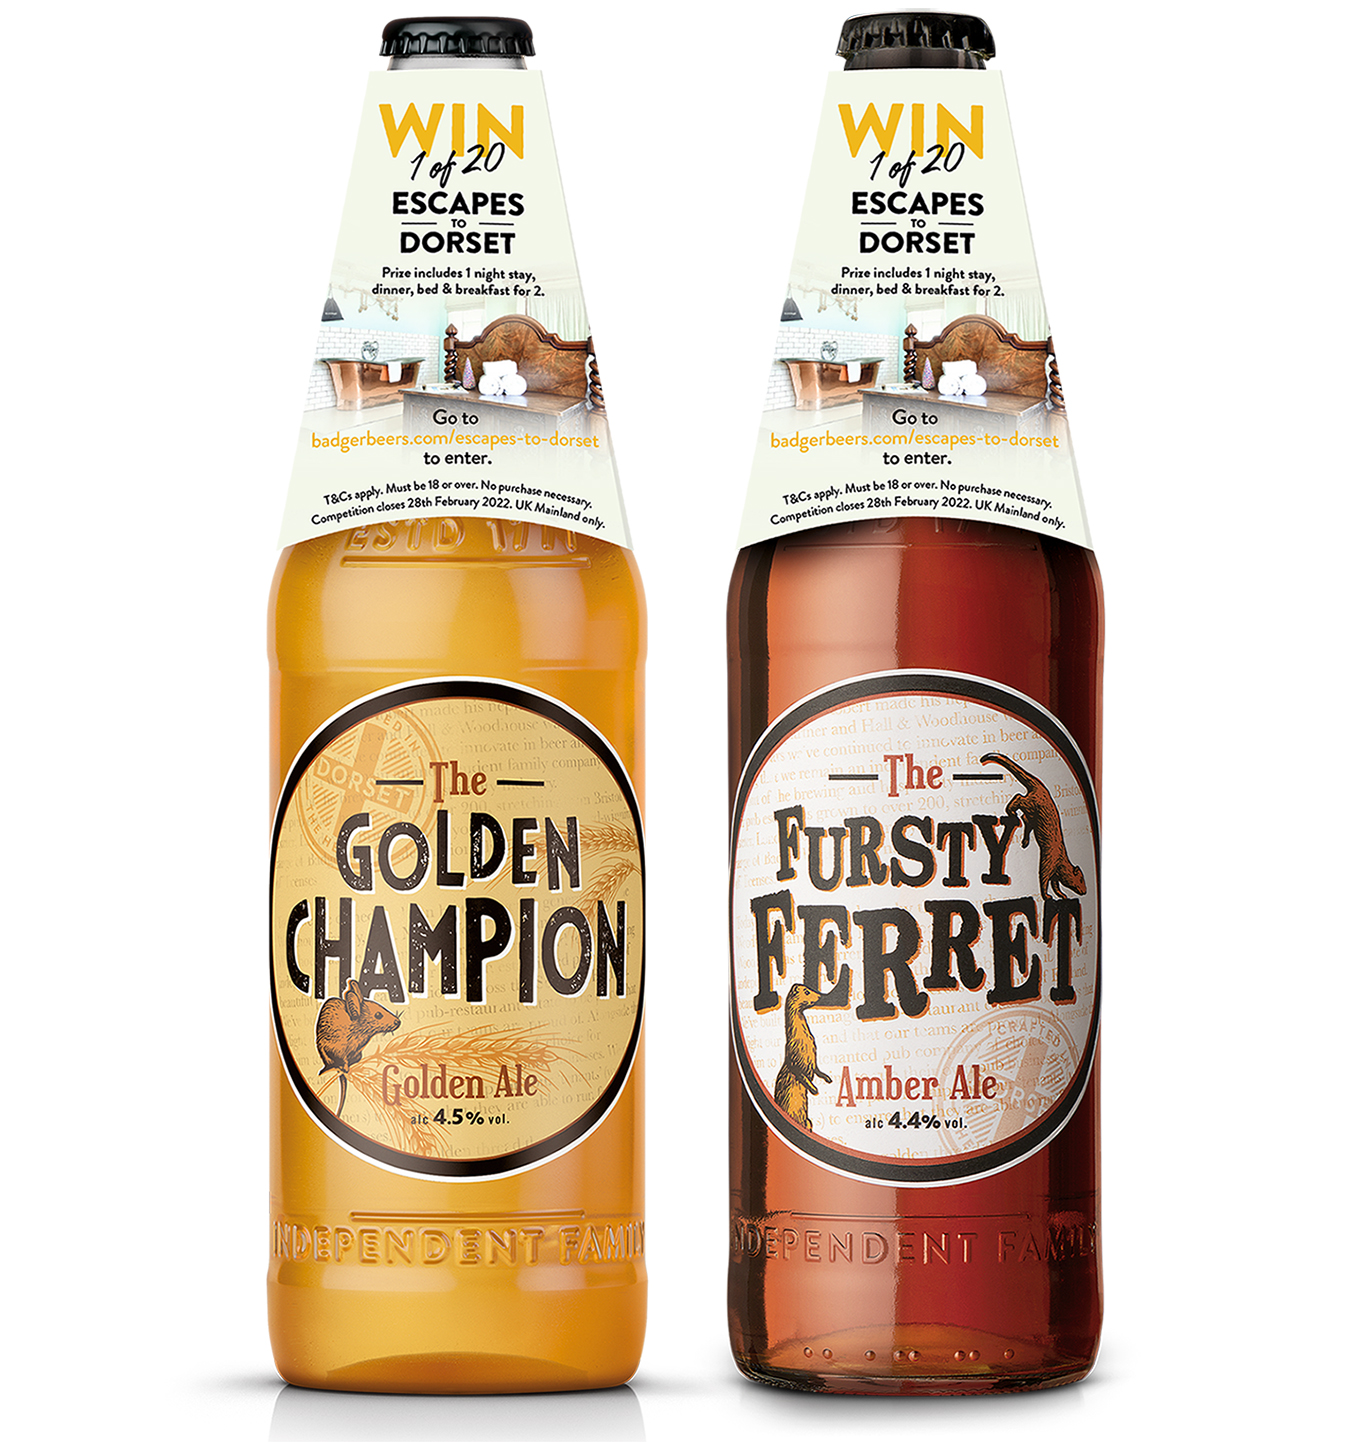 Badger Beer bottle shots: Ale brand badger beers offers Dorset staycations in on-pack promotion